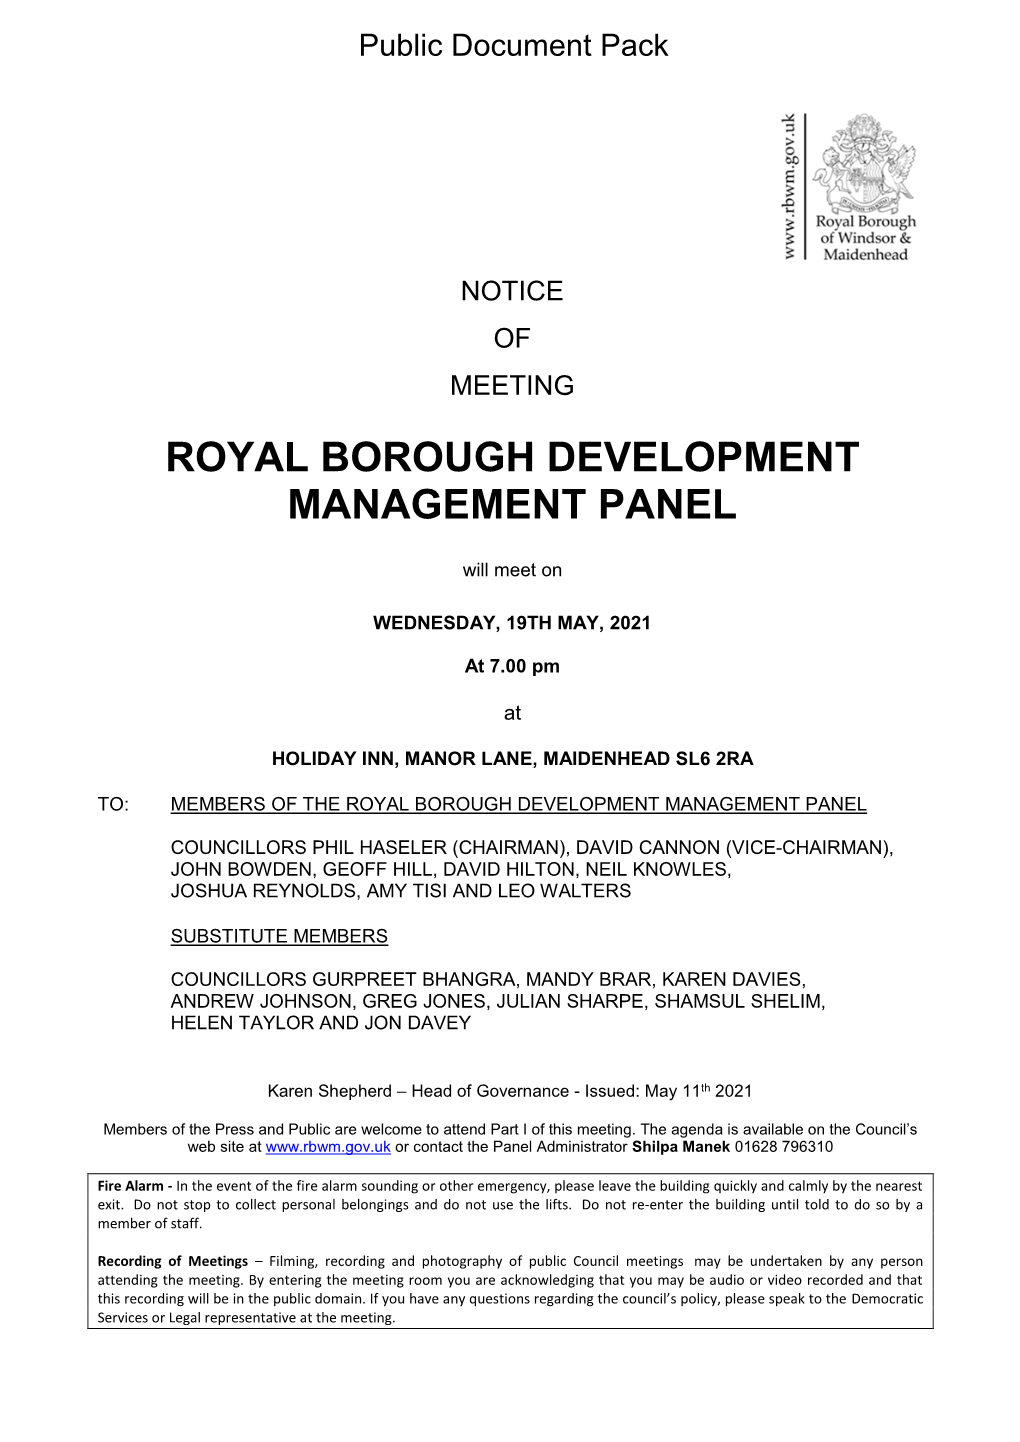 (Public Pack)Agenda Document for Royal Borough Development